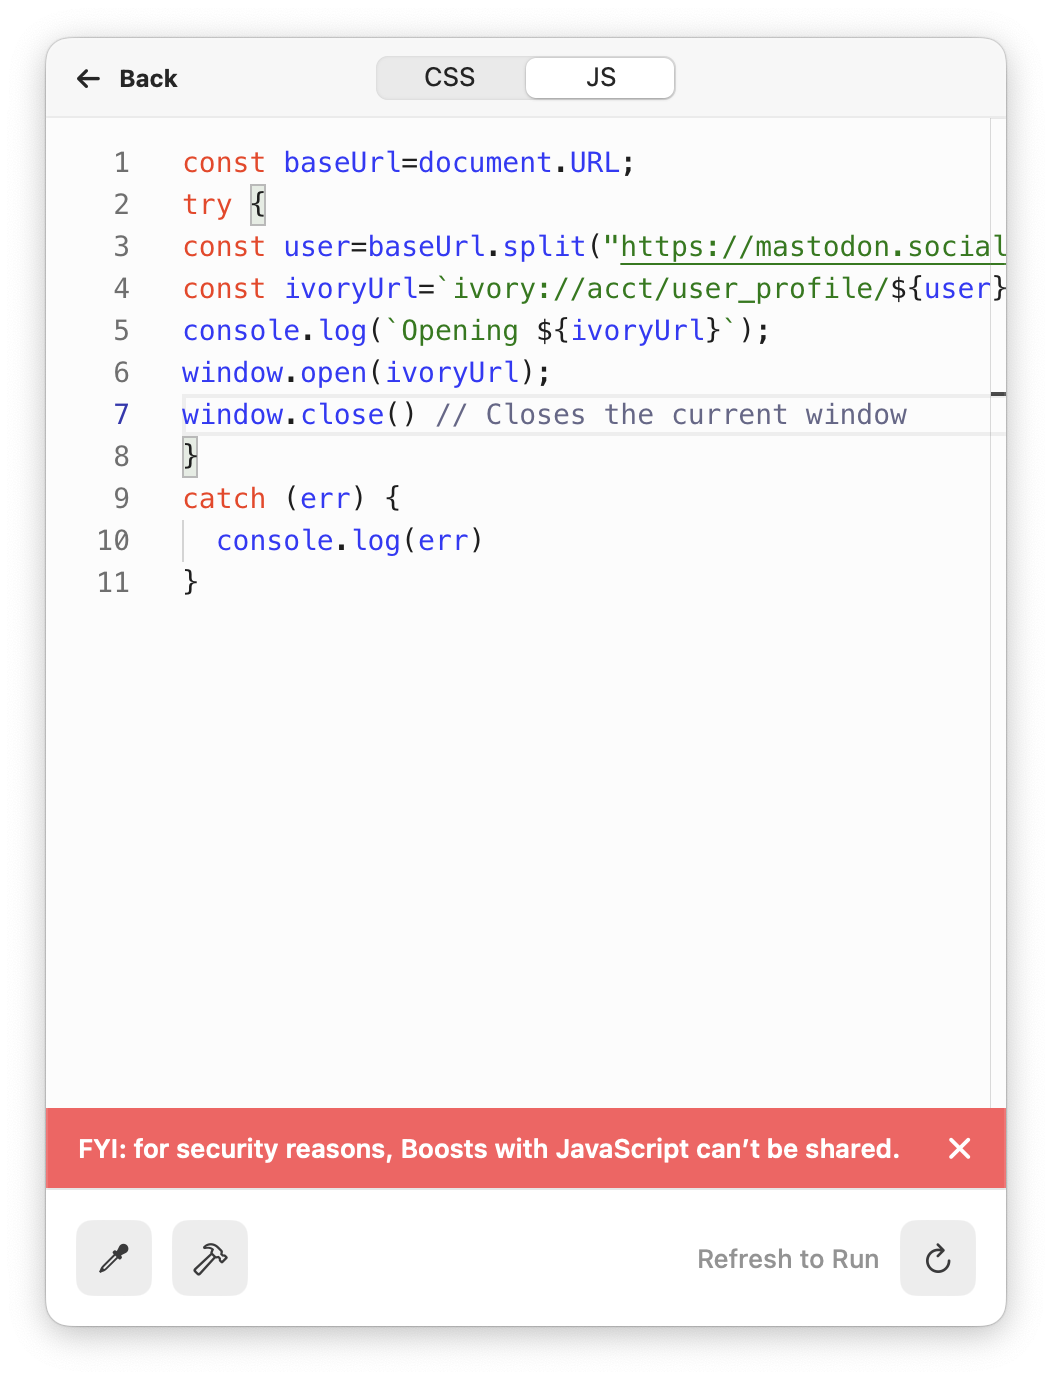 The javascript code window